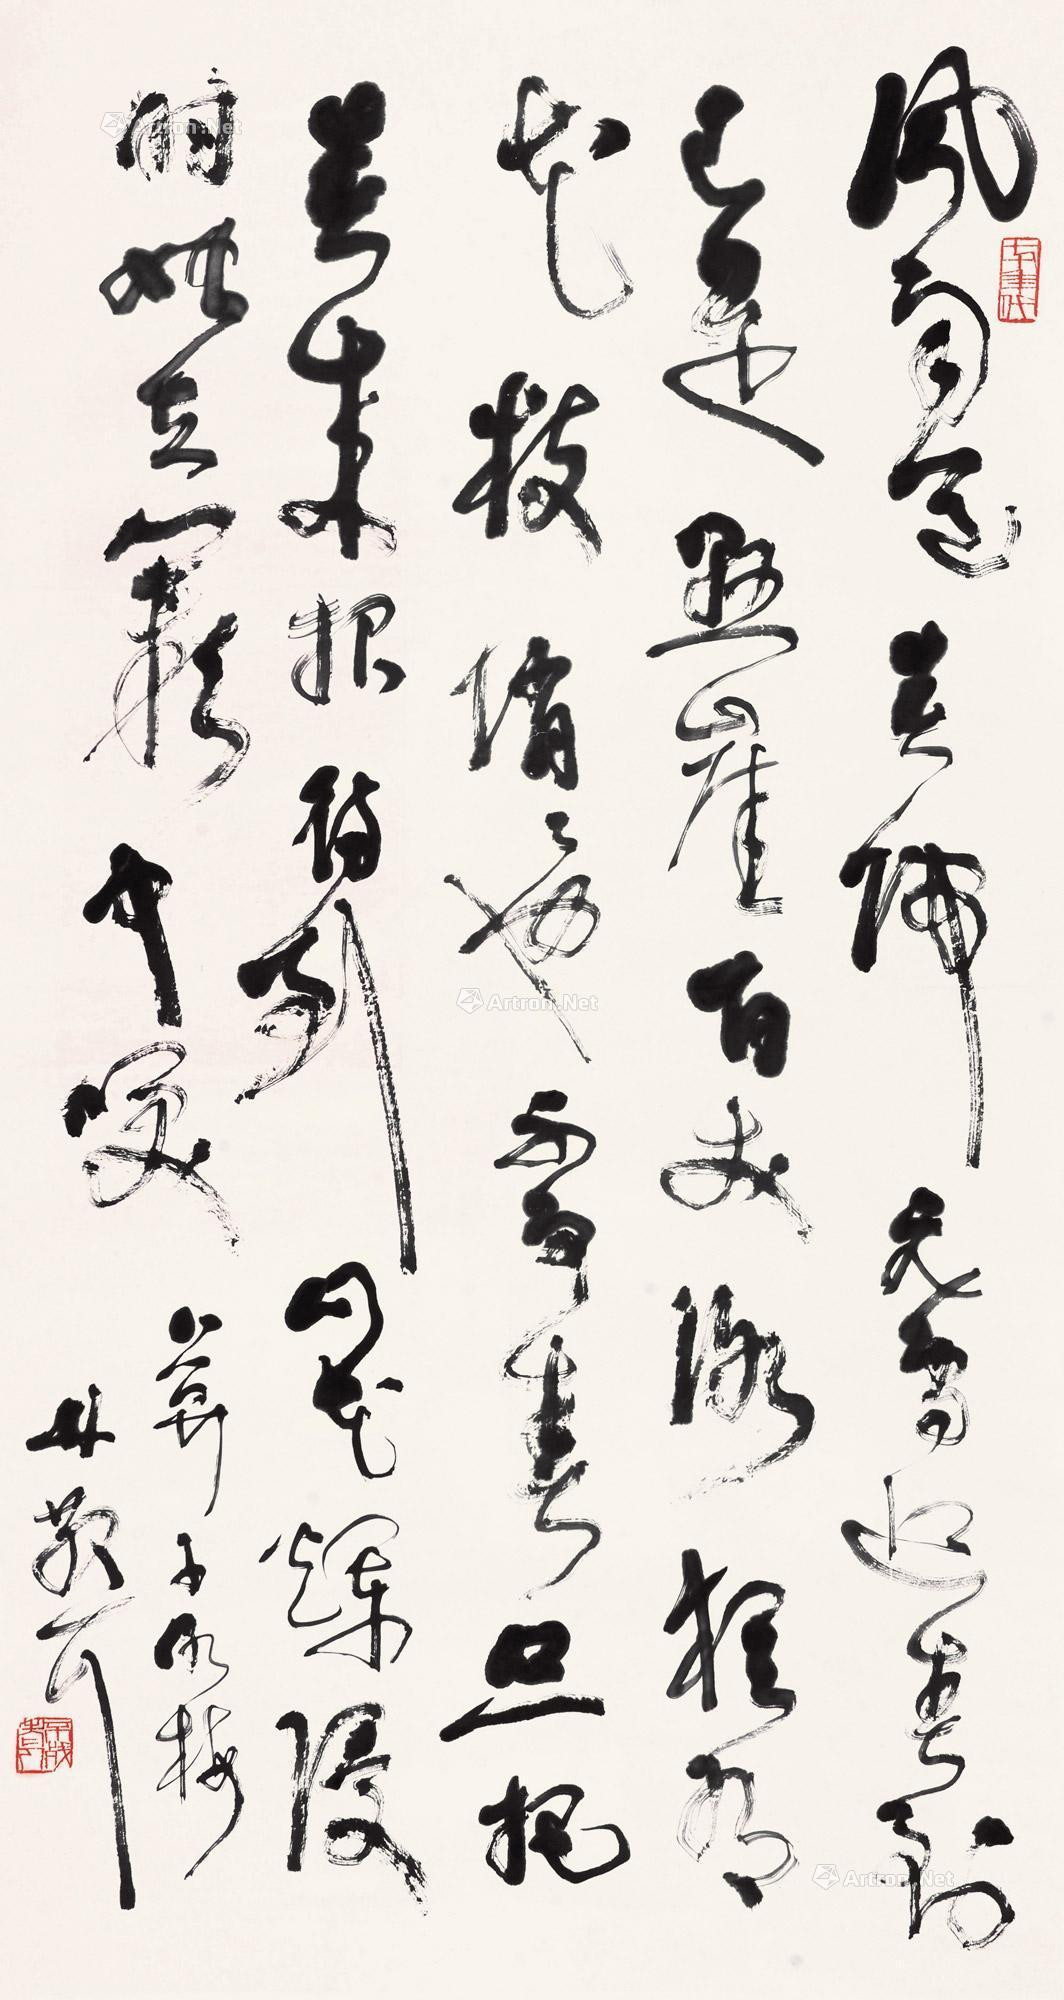 Calligraphy In Cursive Script